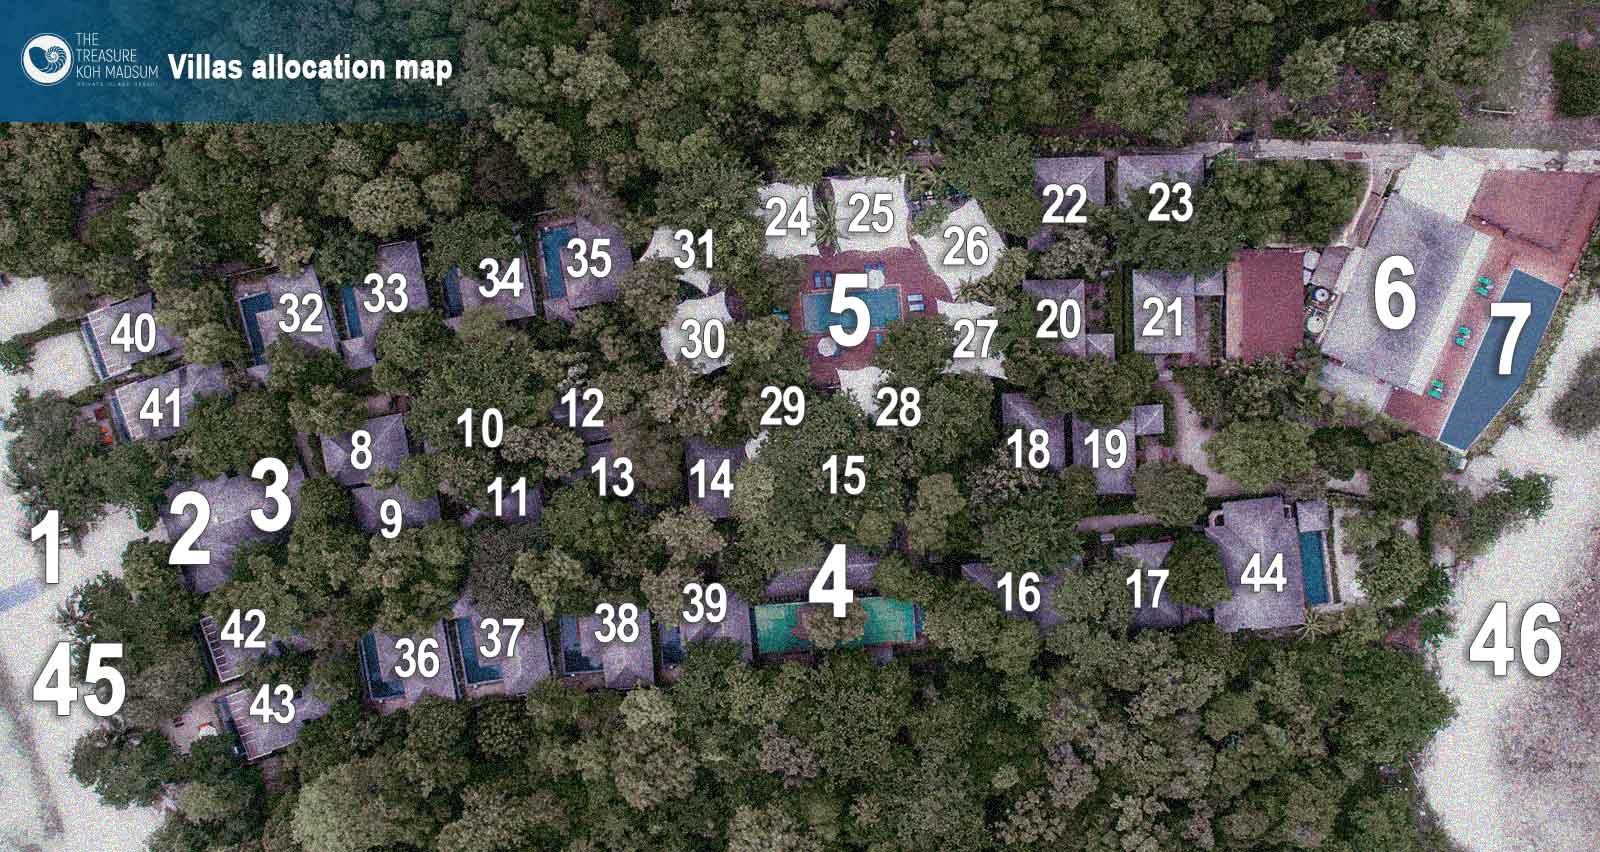 Villas allocation map The Treasure Koh Madsum